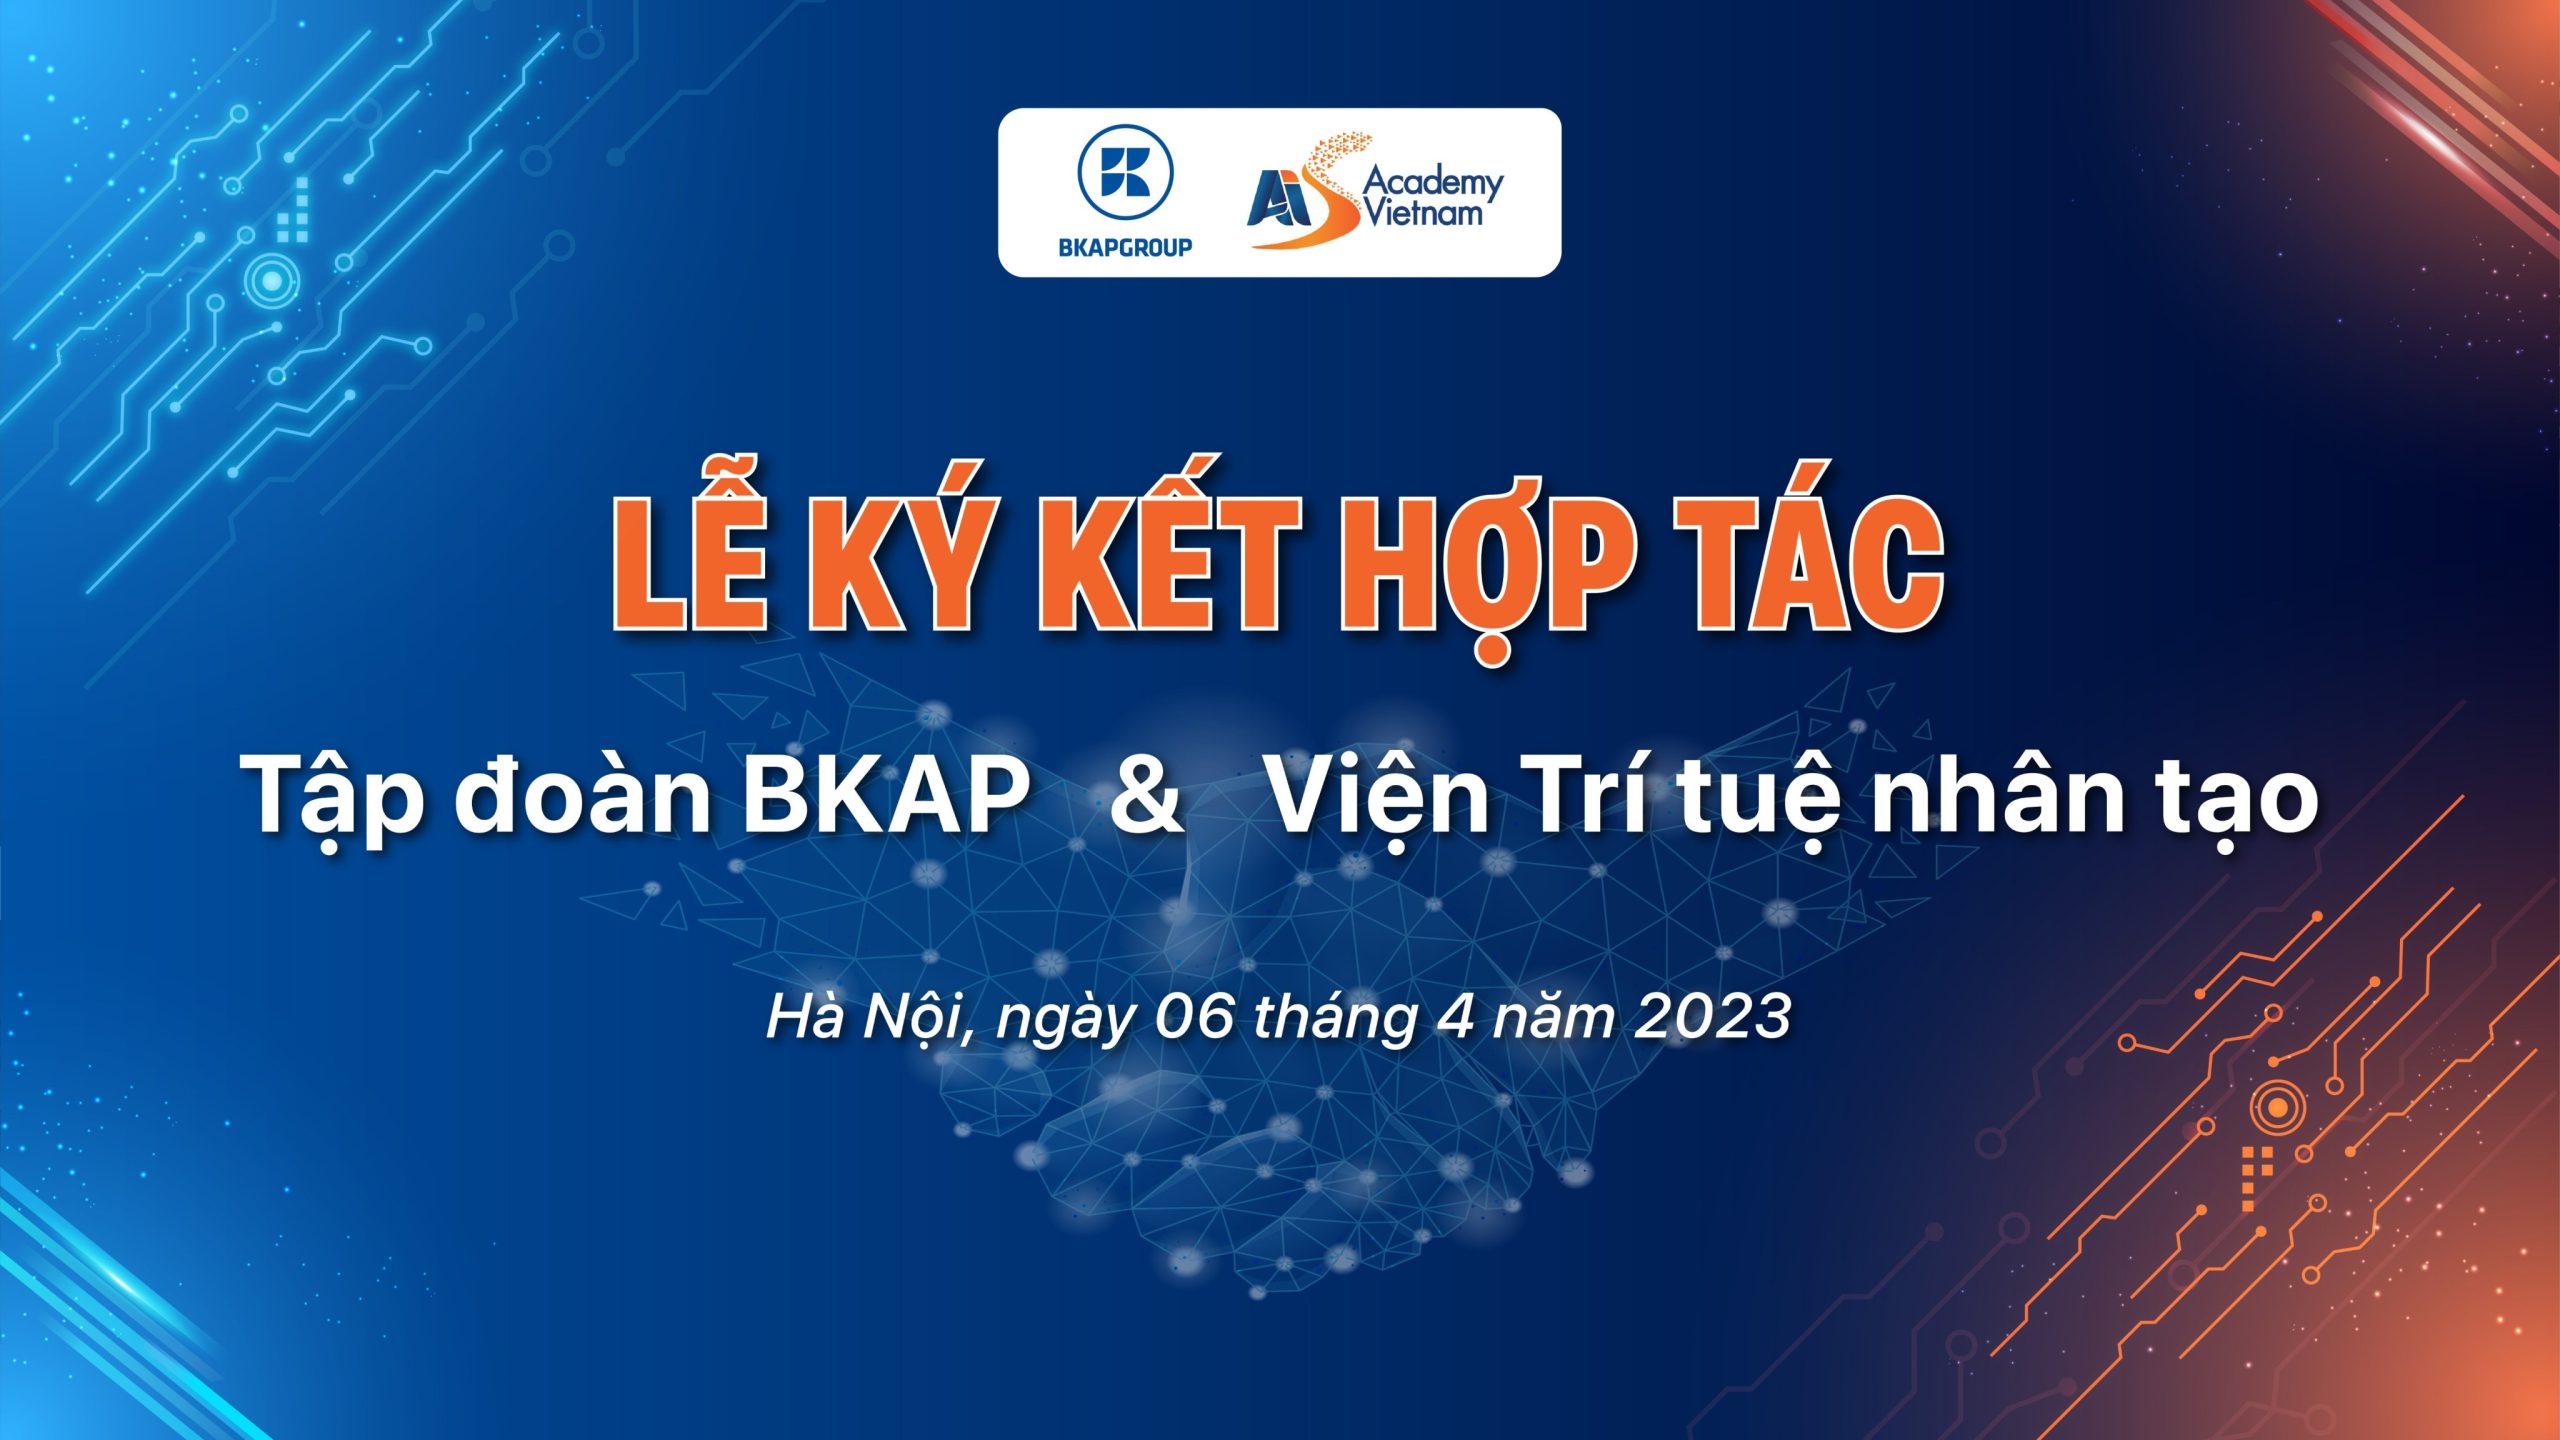 bkapgroup-ai-academy-vietnam